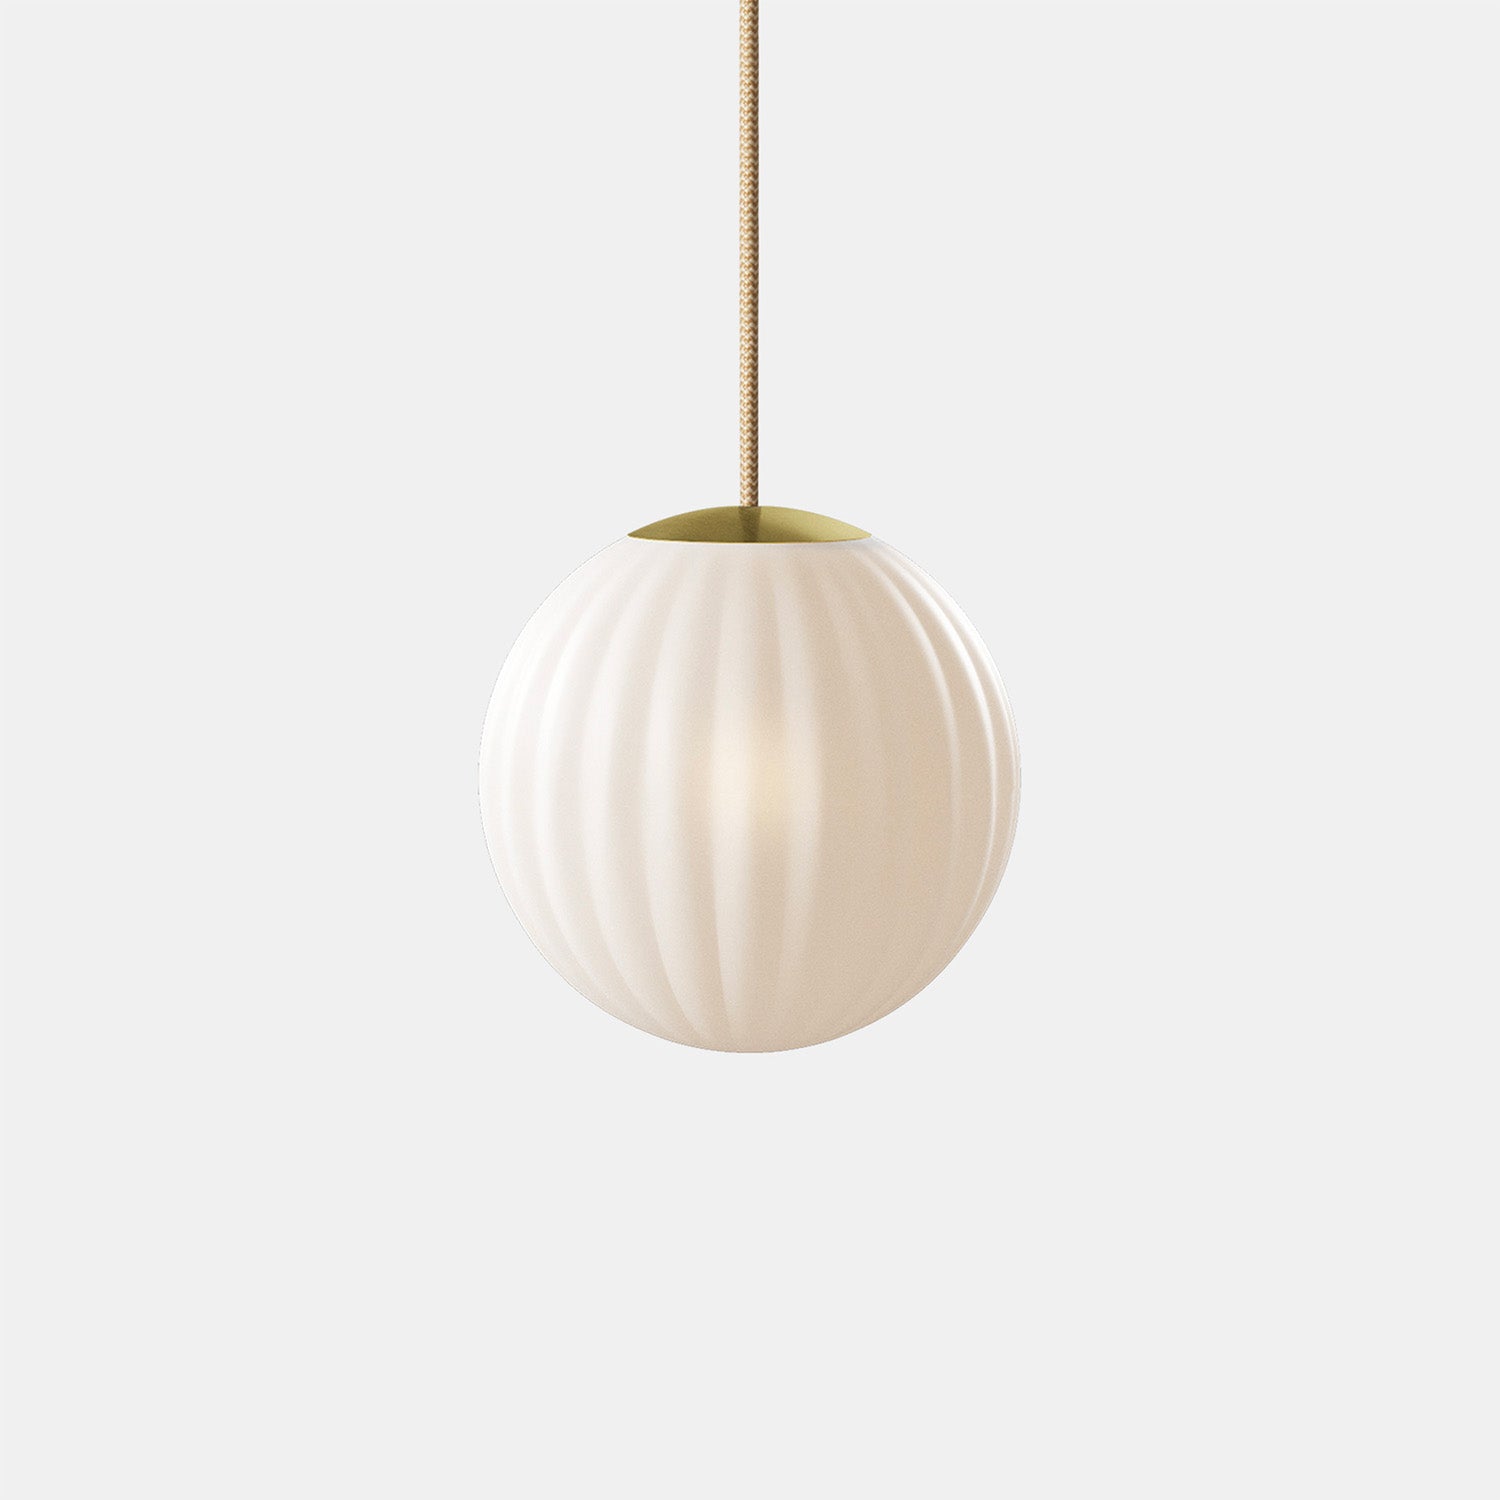 MODECO - Matte white glass pendant light, elegant and minimalist